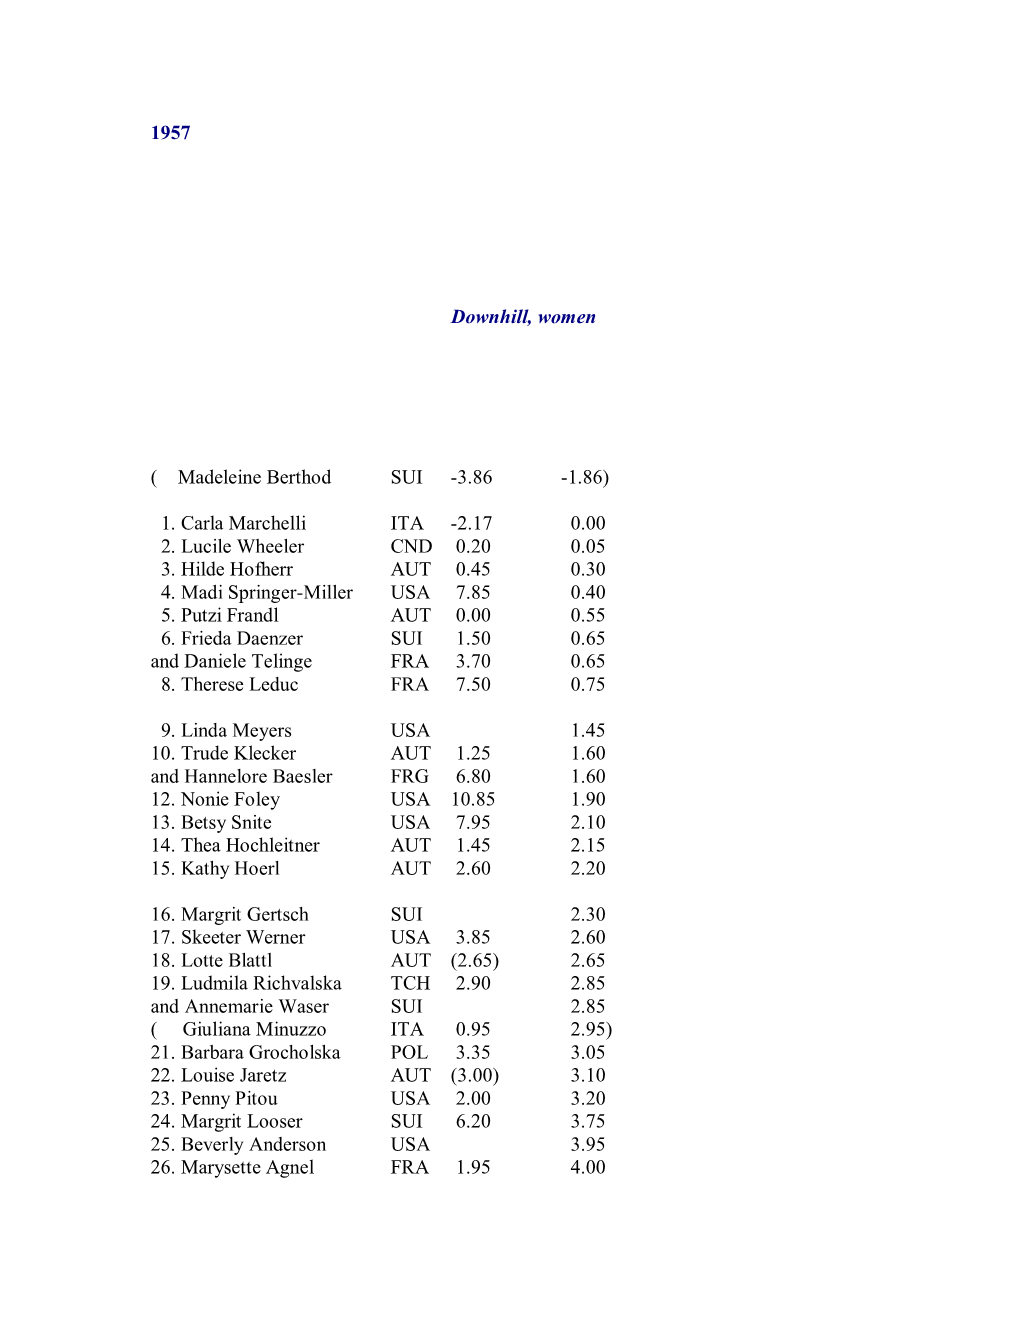 1957 Downhill, Women ( Madeleine Berthod SUI -3.86 -1.86) 1. Carla Marchelli ITA -2.17 0.00 2. Lucile Wheeler CND 0